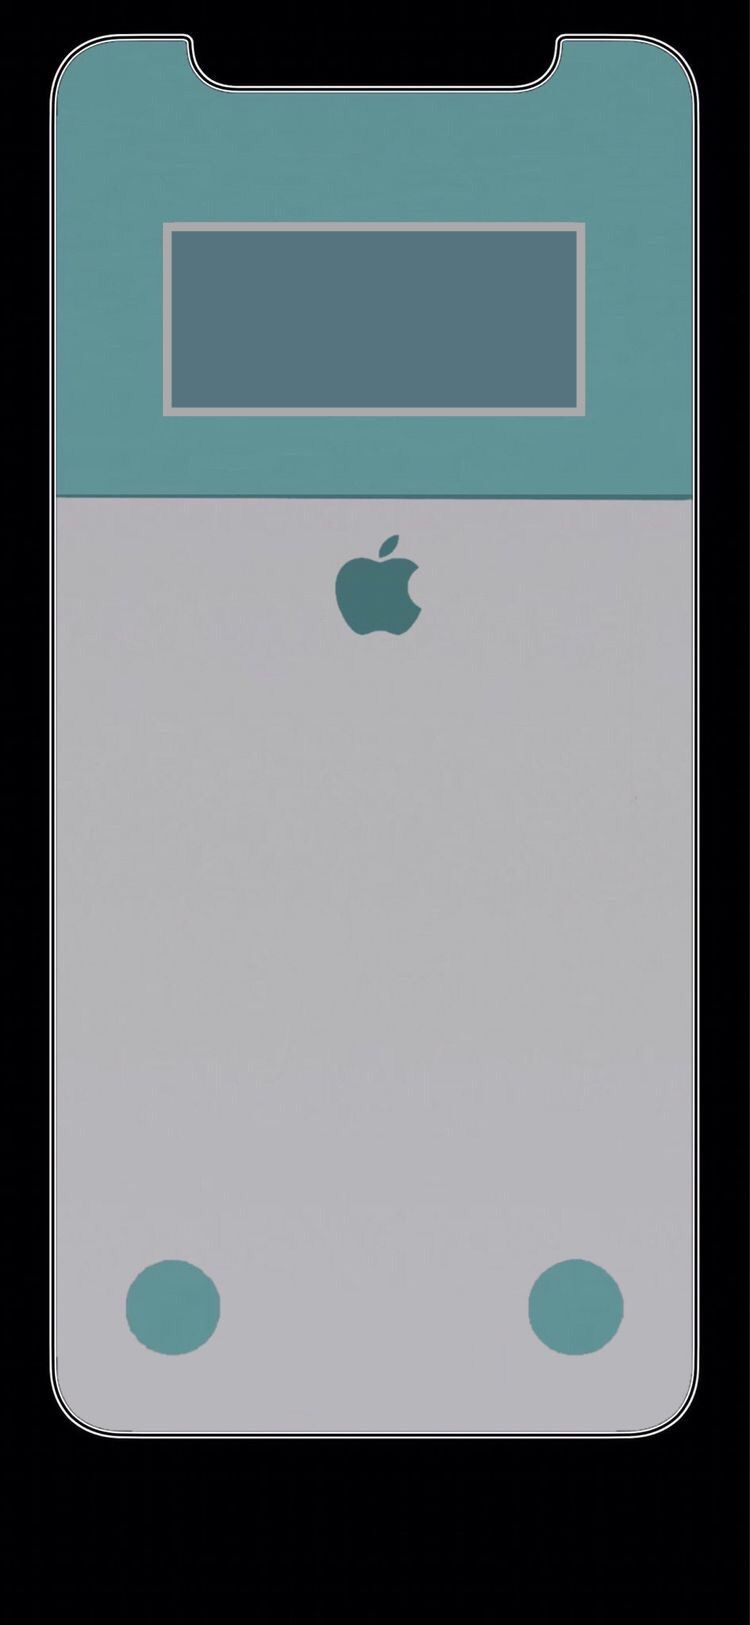 Lock Screen iPhone X. Apple wallpaper iphone, Apple logo wallpaper iphone, HD wallpaper iphone